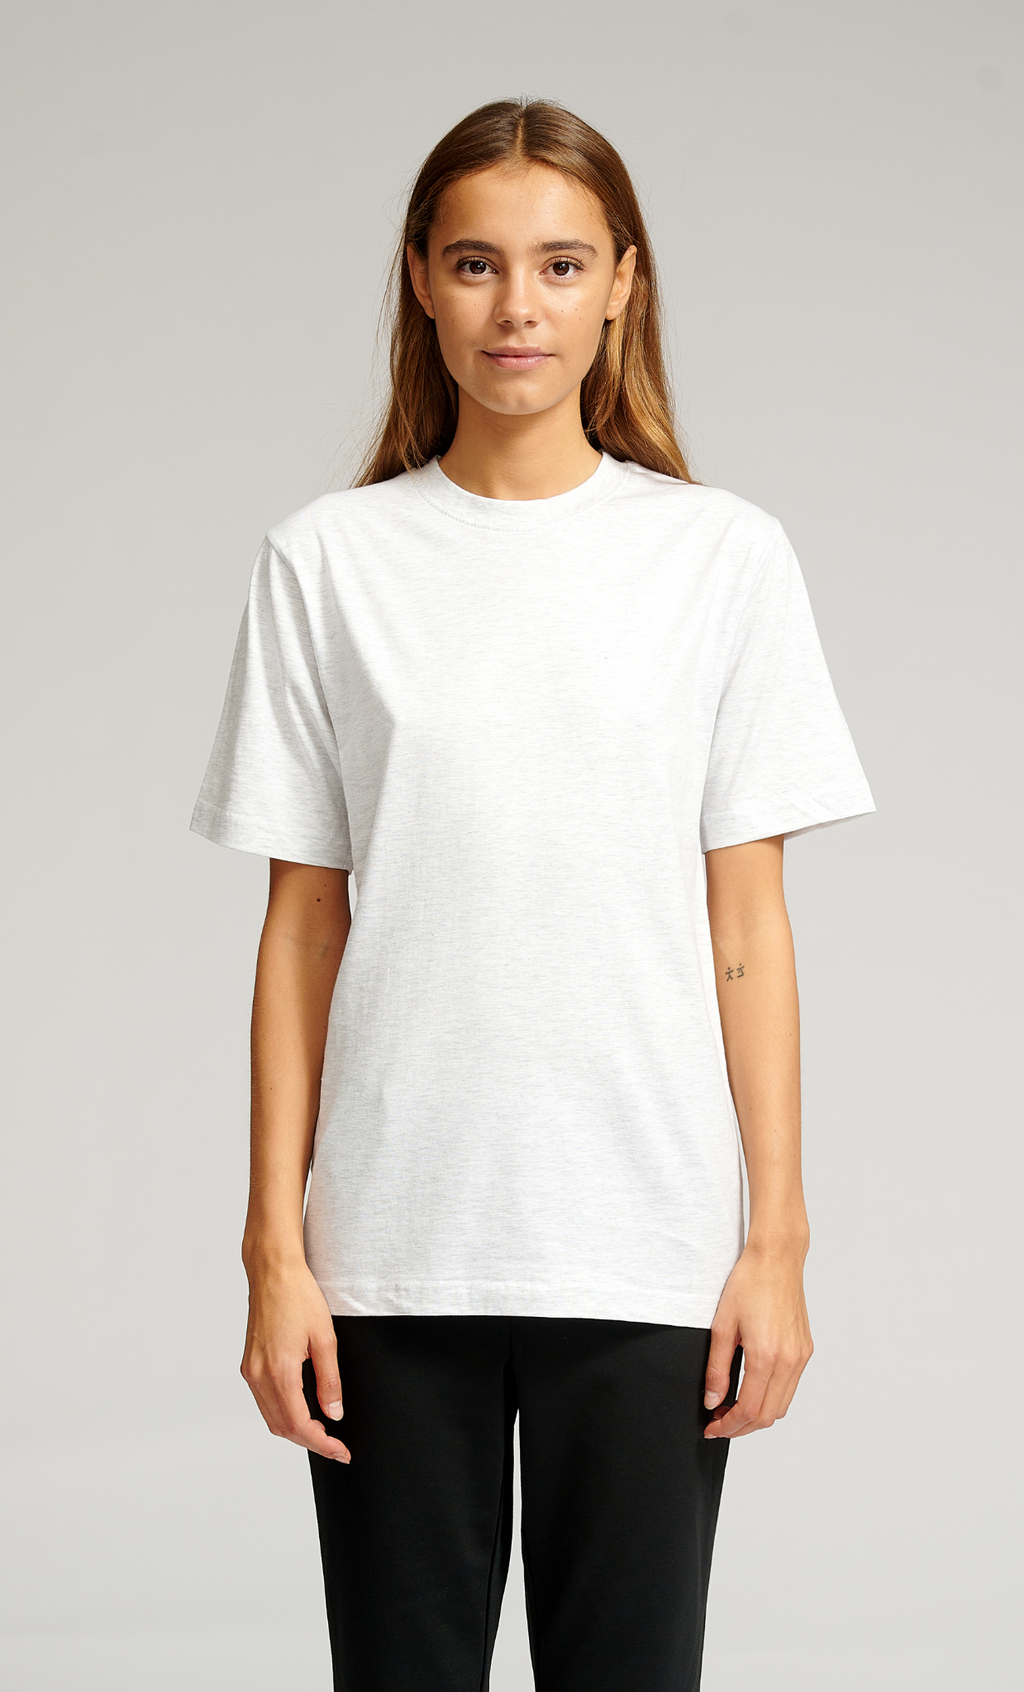 Oversized T-shirts - Women's Package Deal (9 pcs)